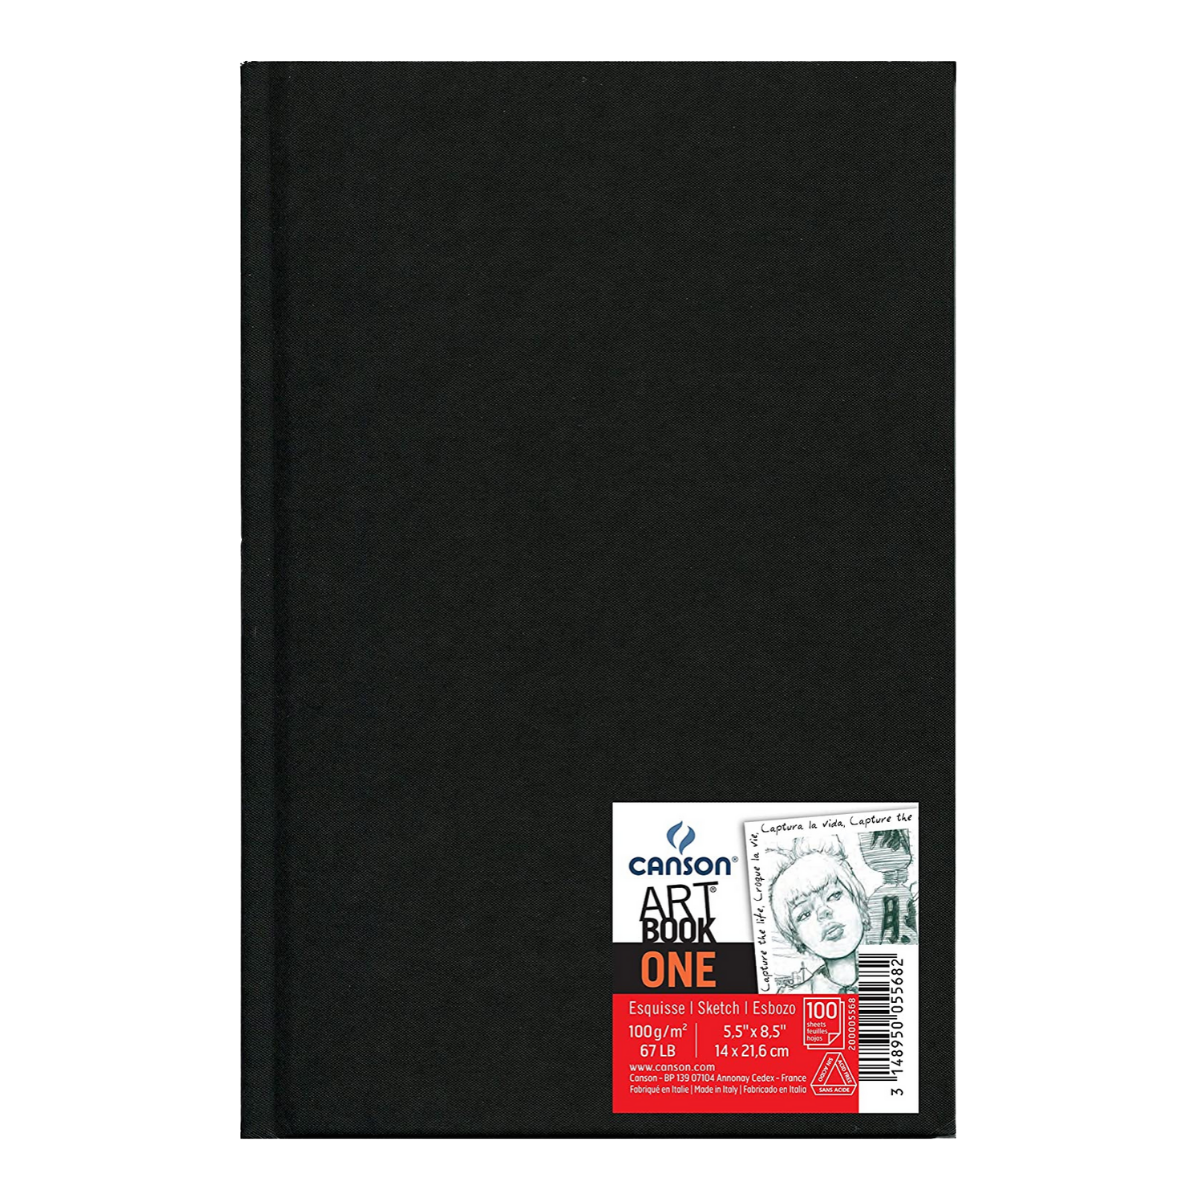 Cuaderno Canson Dibujo Art Book One Sketch 14 X 21.6 Cm 98 Hojas